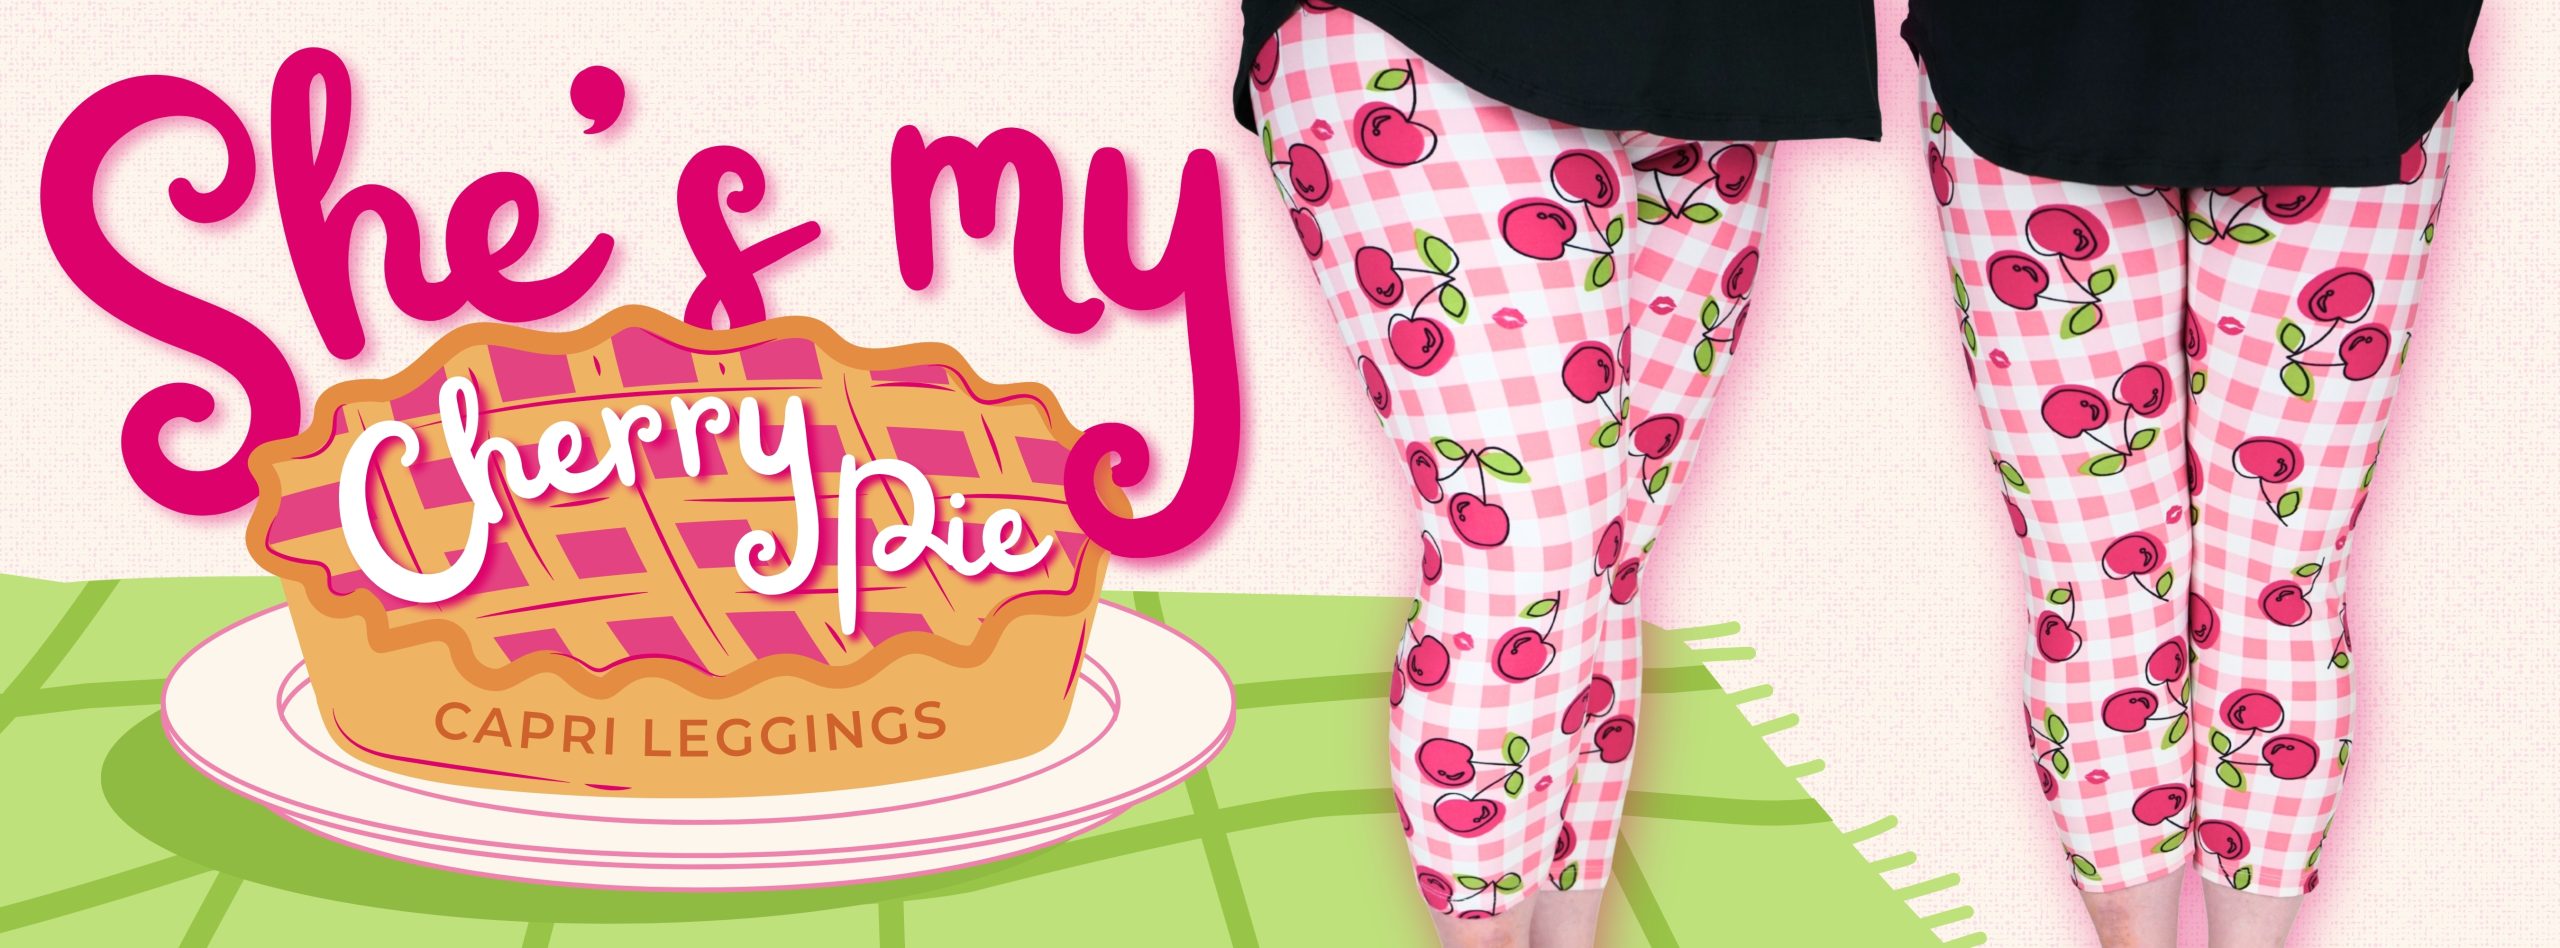 New She's Got Leggz capri leggings called "She's My Cherry Pie"